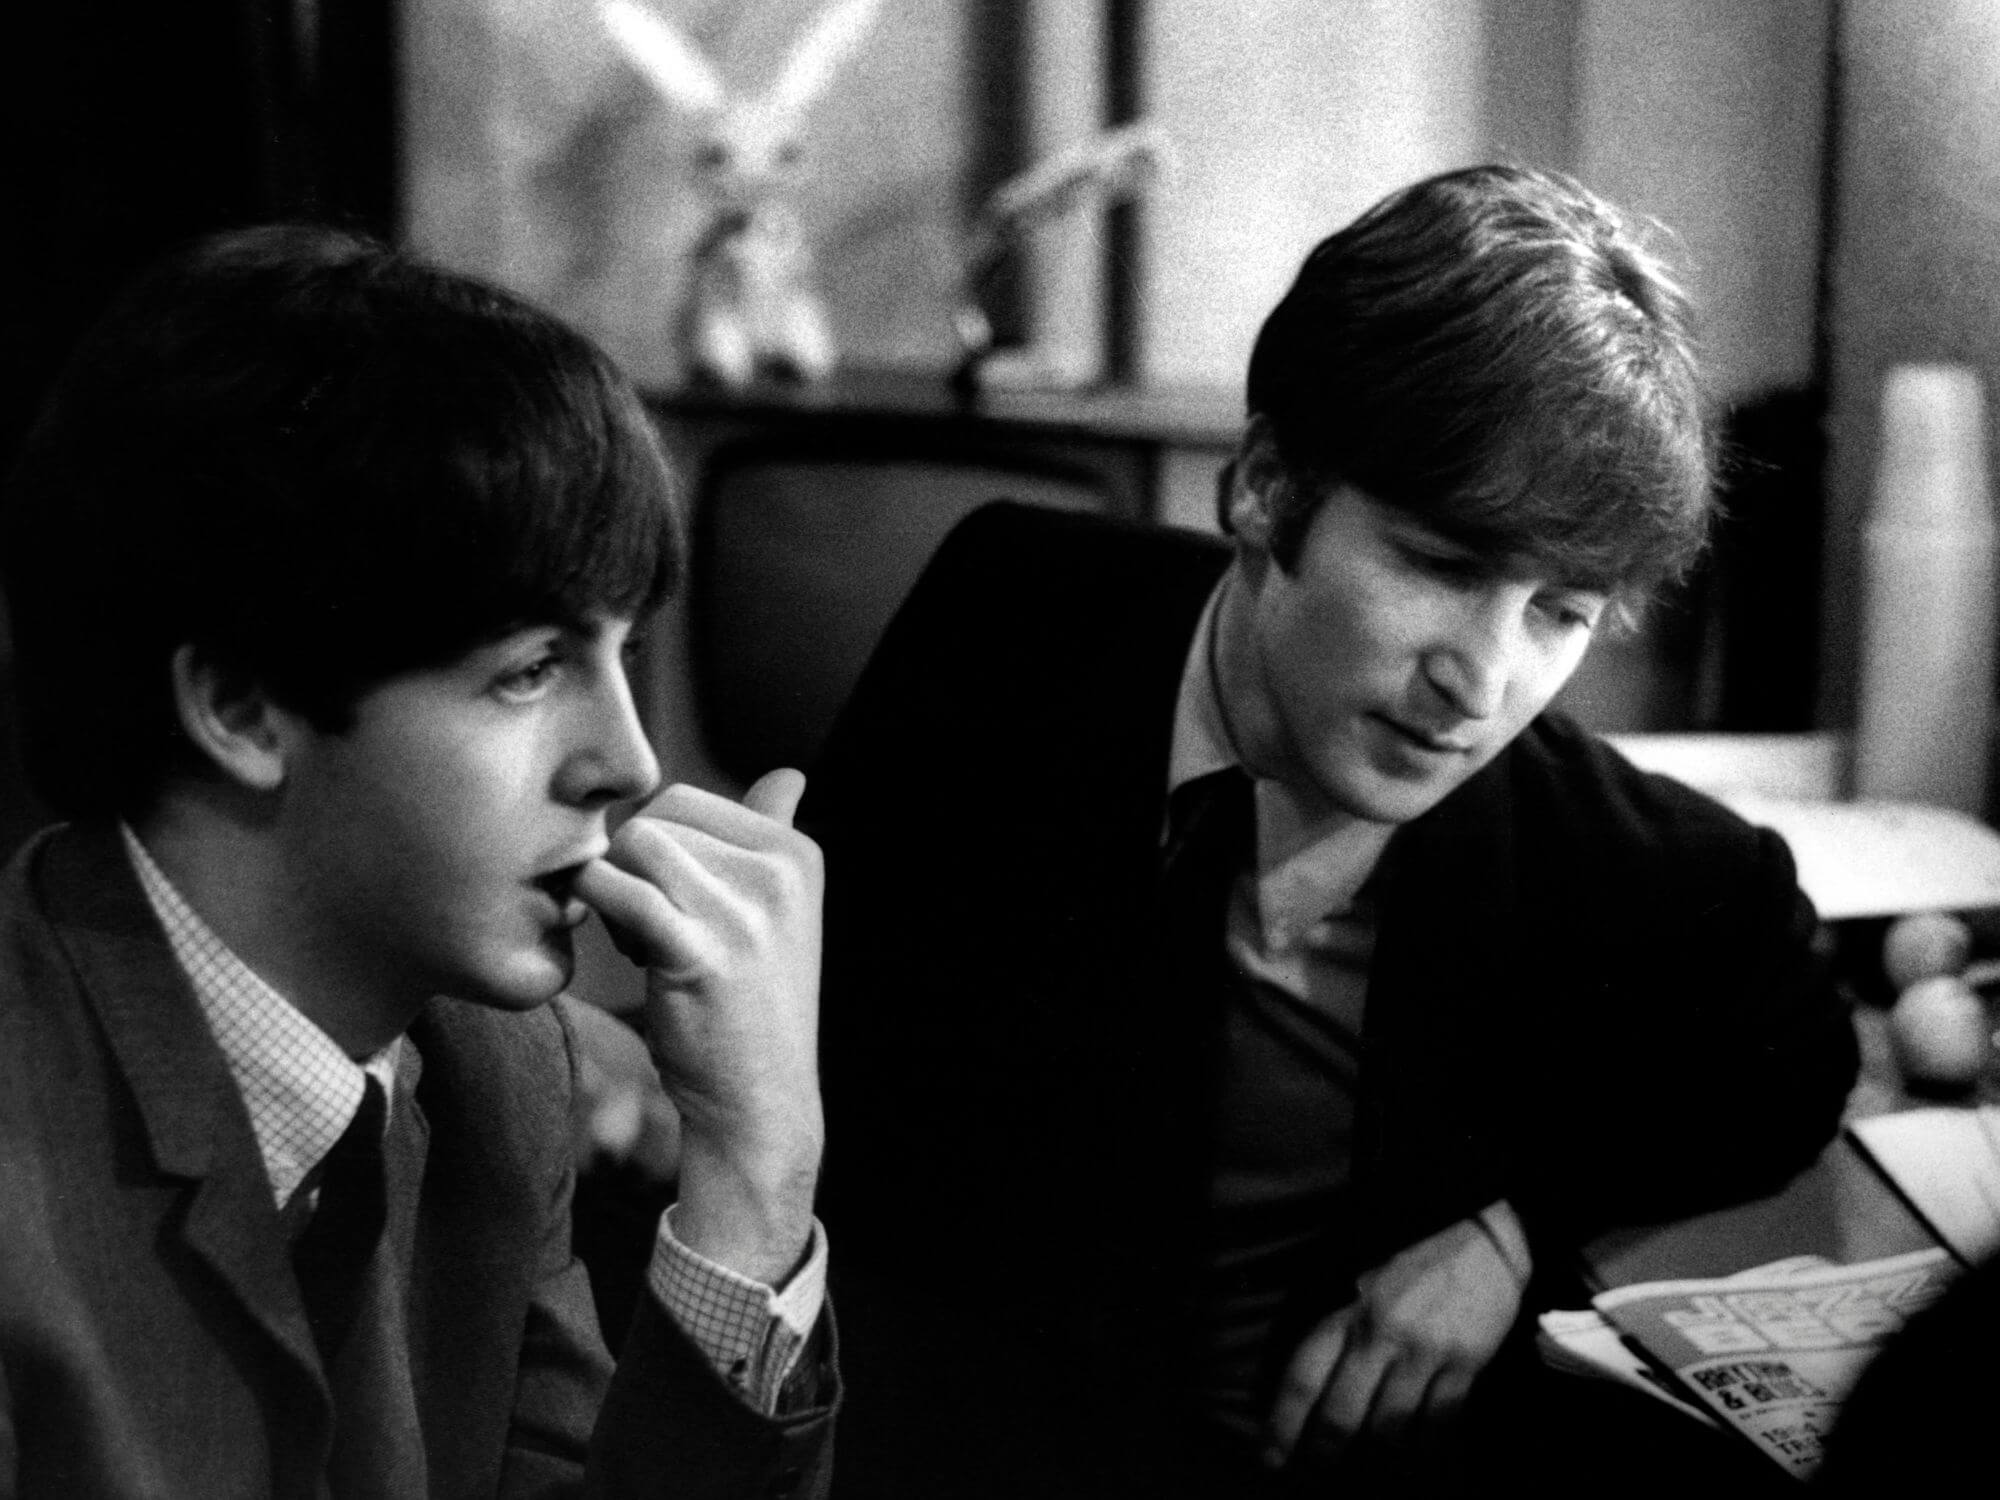 John Lennon with Paul McCartney in 1963